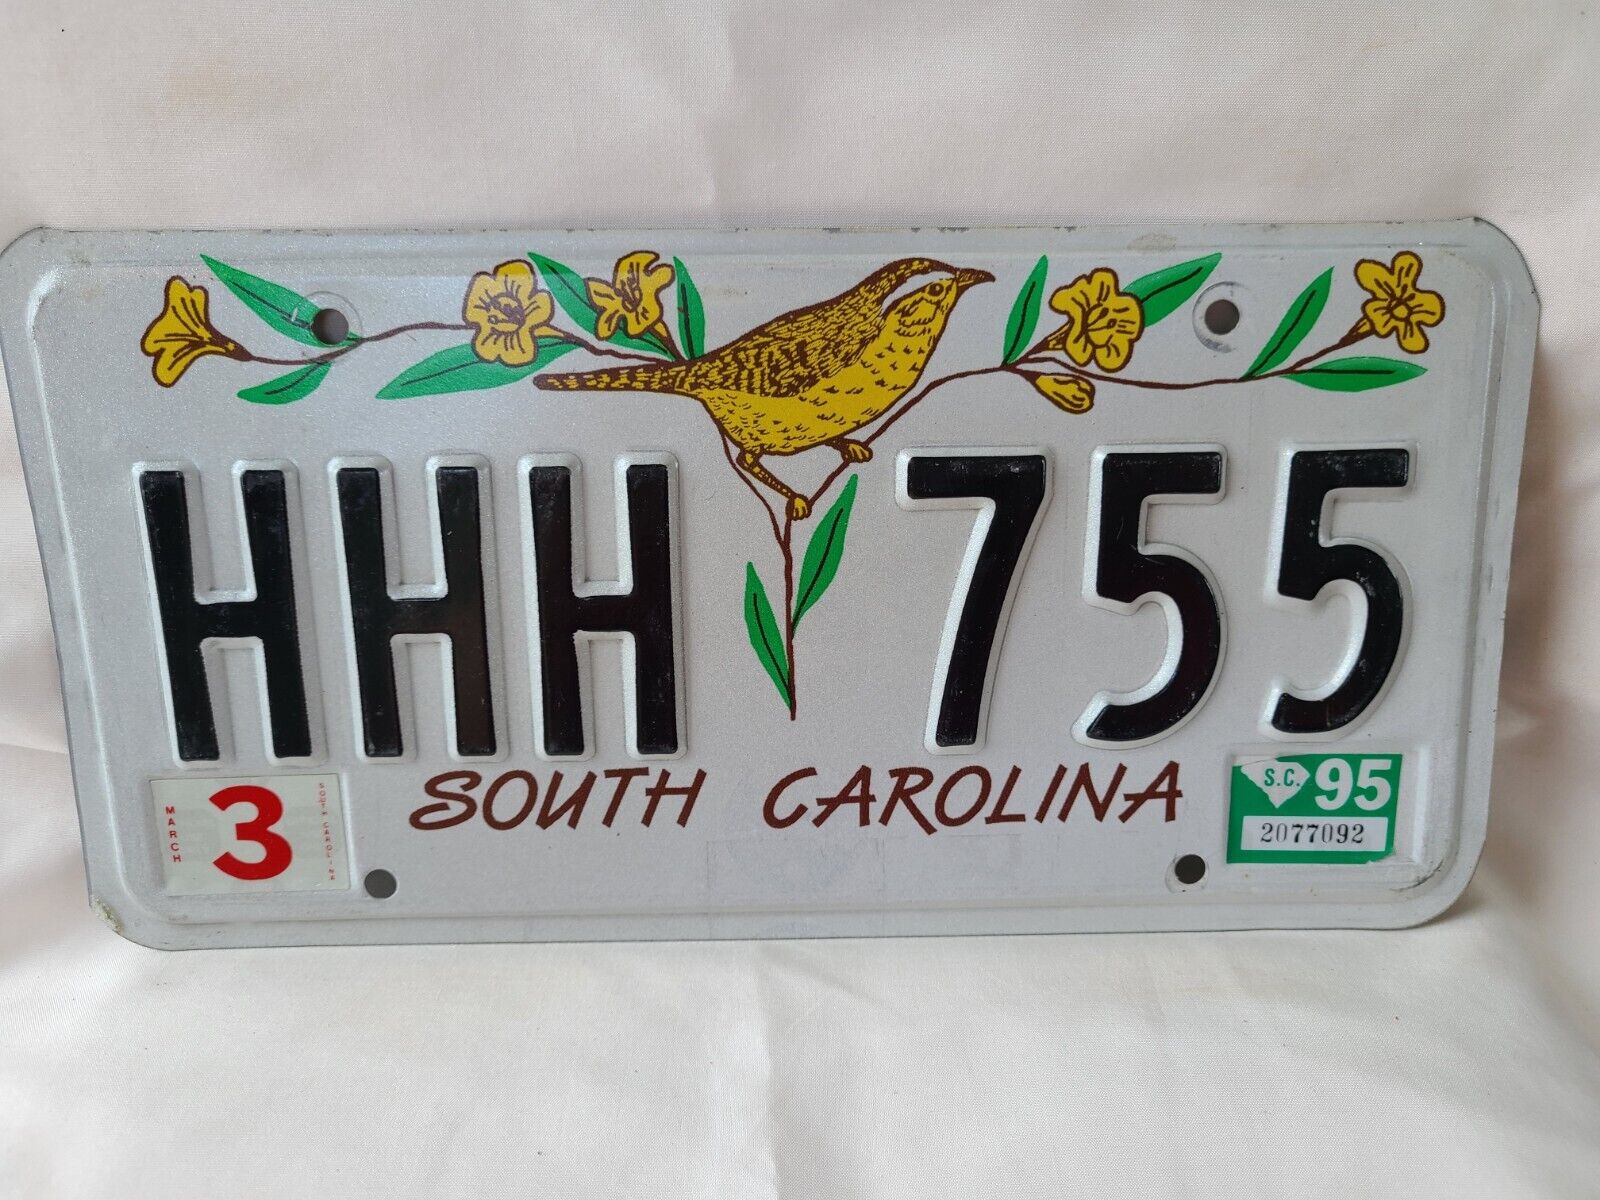 Vintage 1995 South Carolina HHH 755 License Plate 724